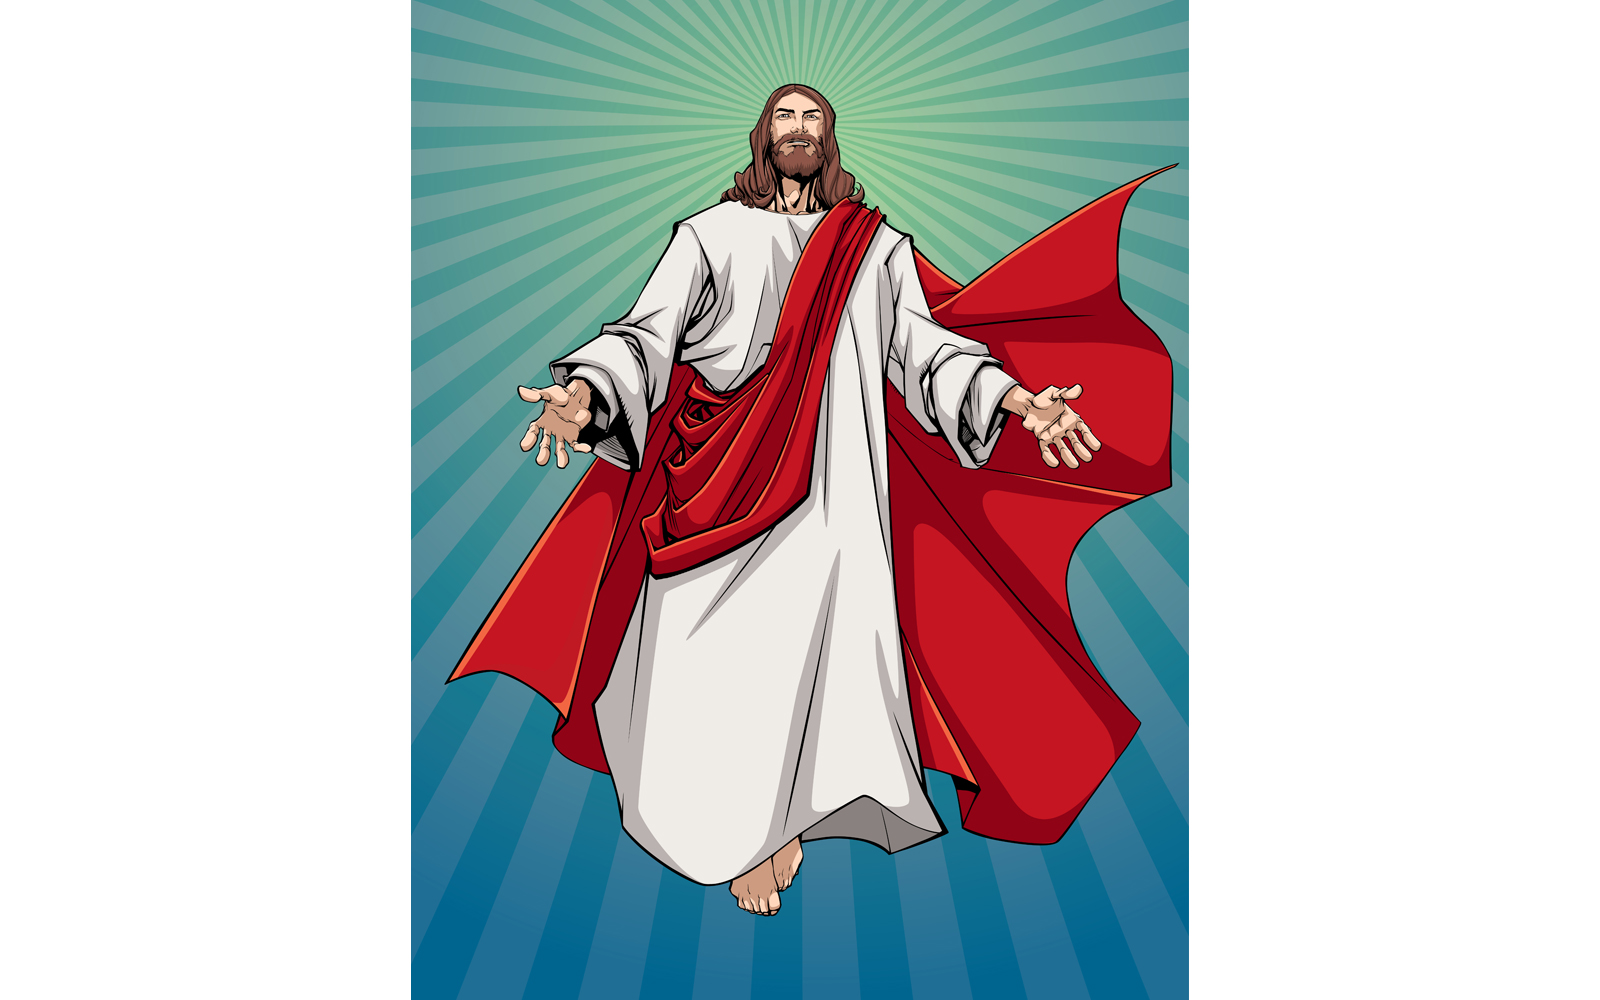 Jesus Open Arms - Illustration